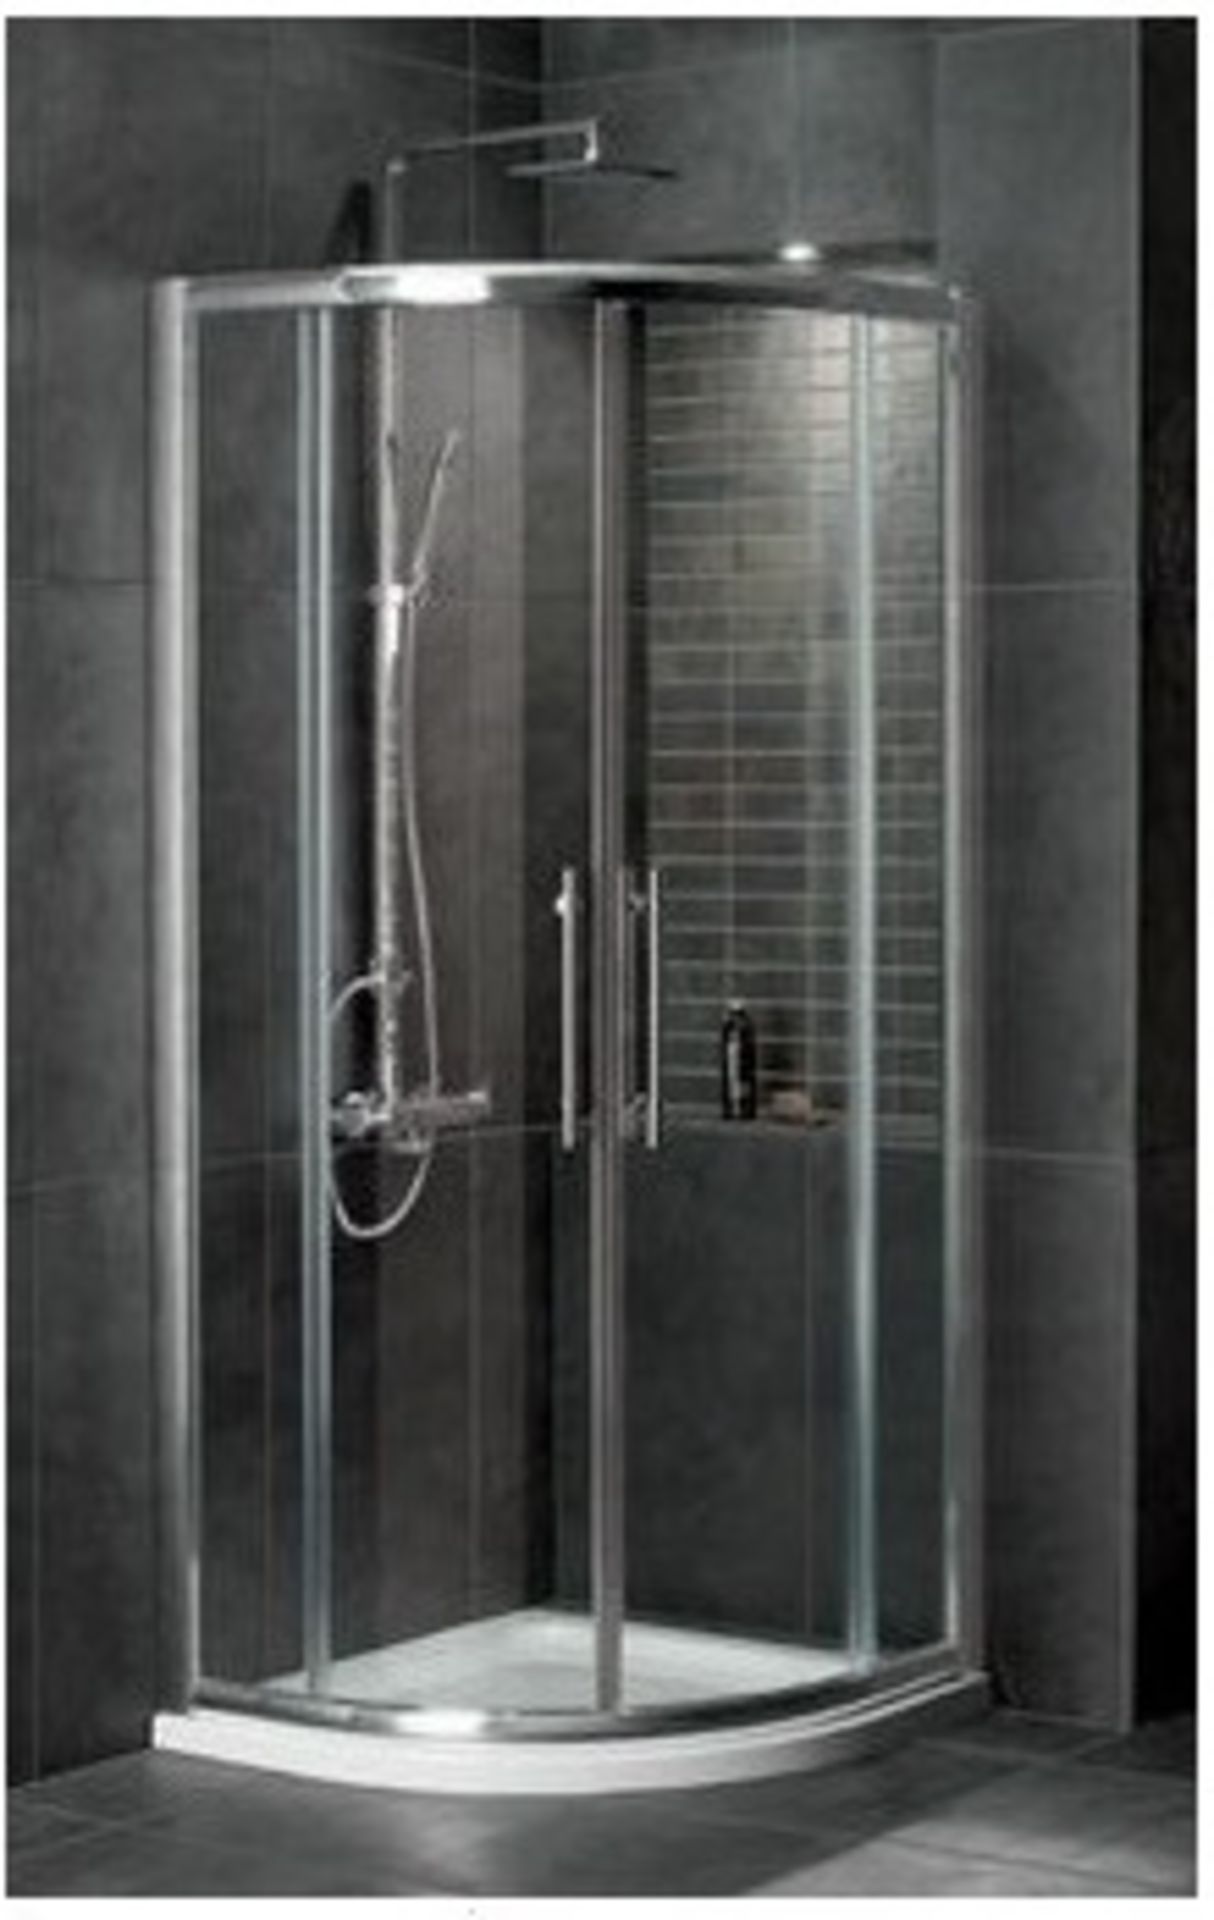 1 x Vogue AQUA LATUS Double Door 800mm Quadrant Shower Enclosure - 8mm Clear Chrome - Polished